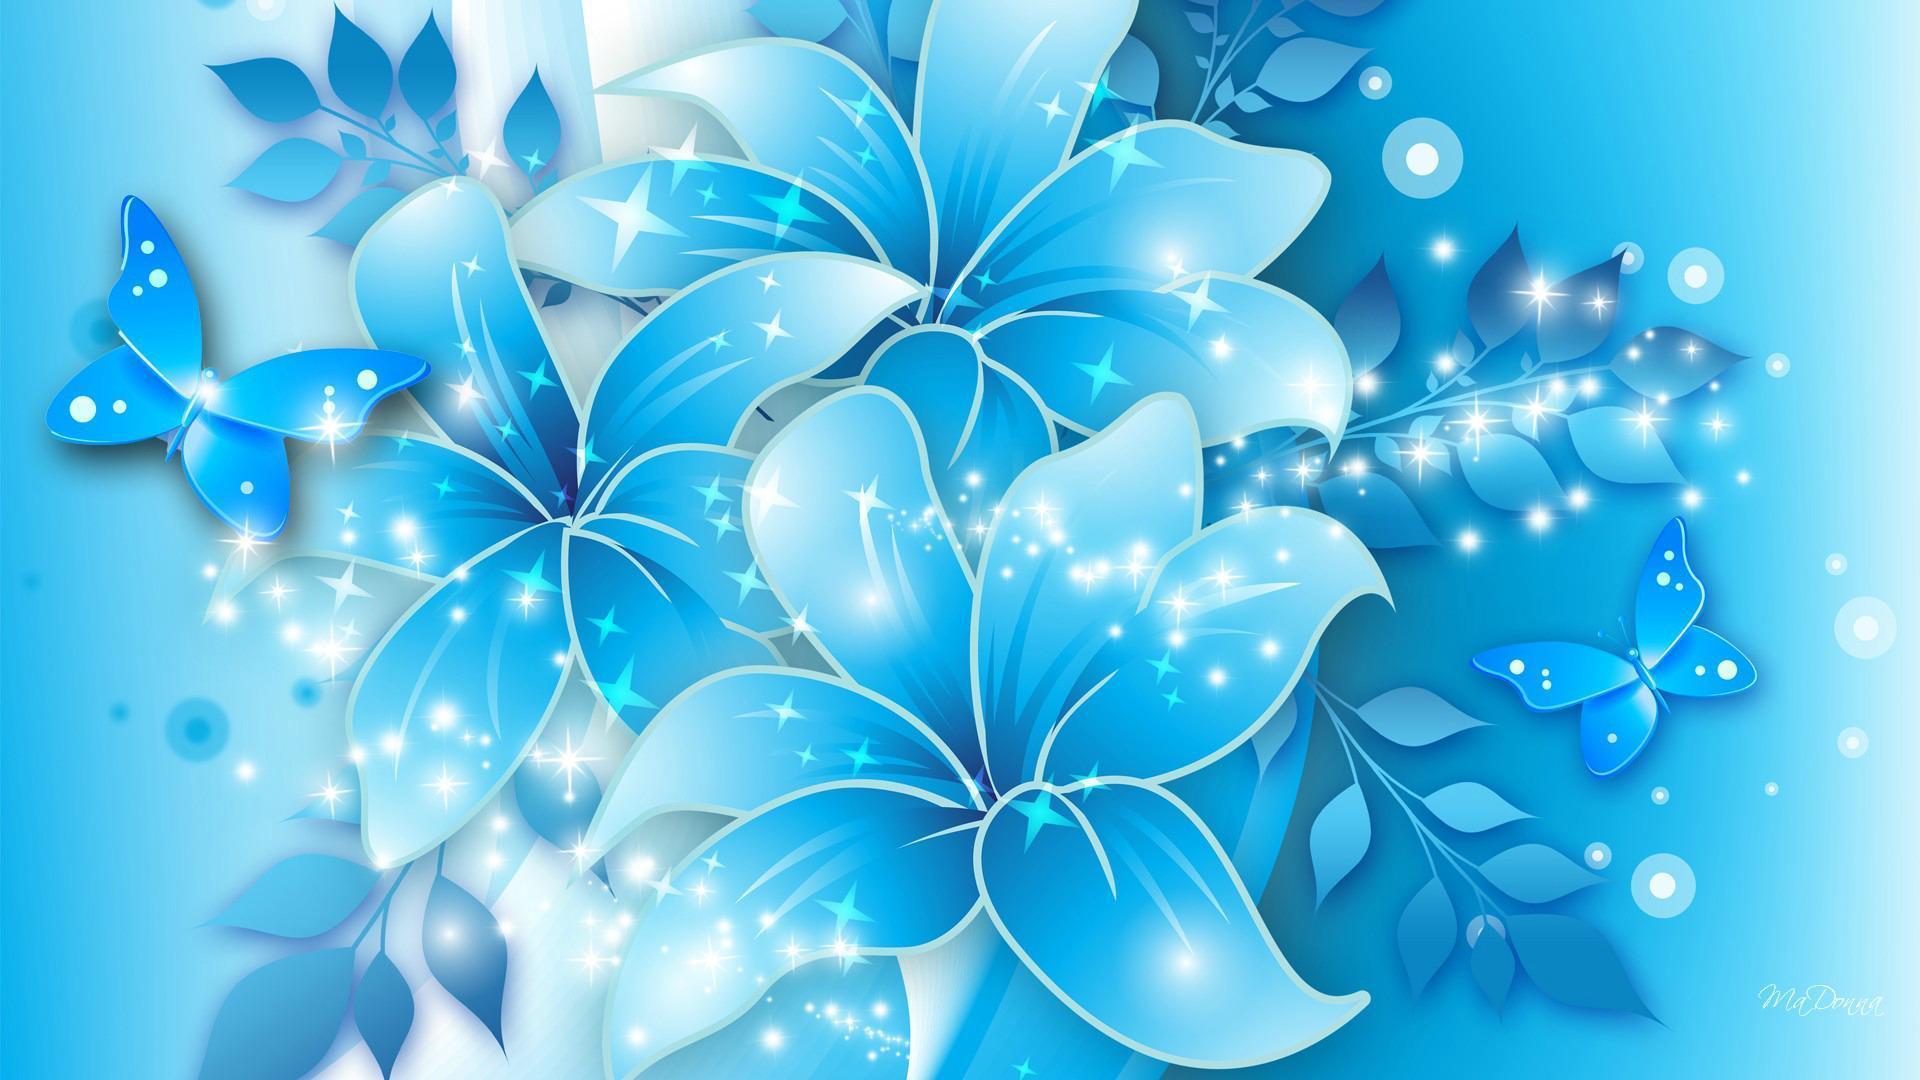 Blue Flower Wallpapers